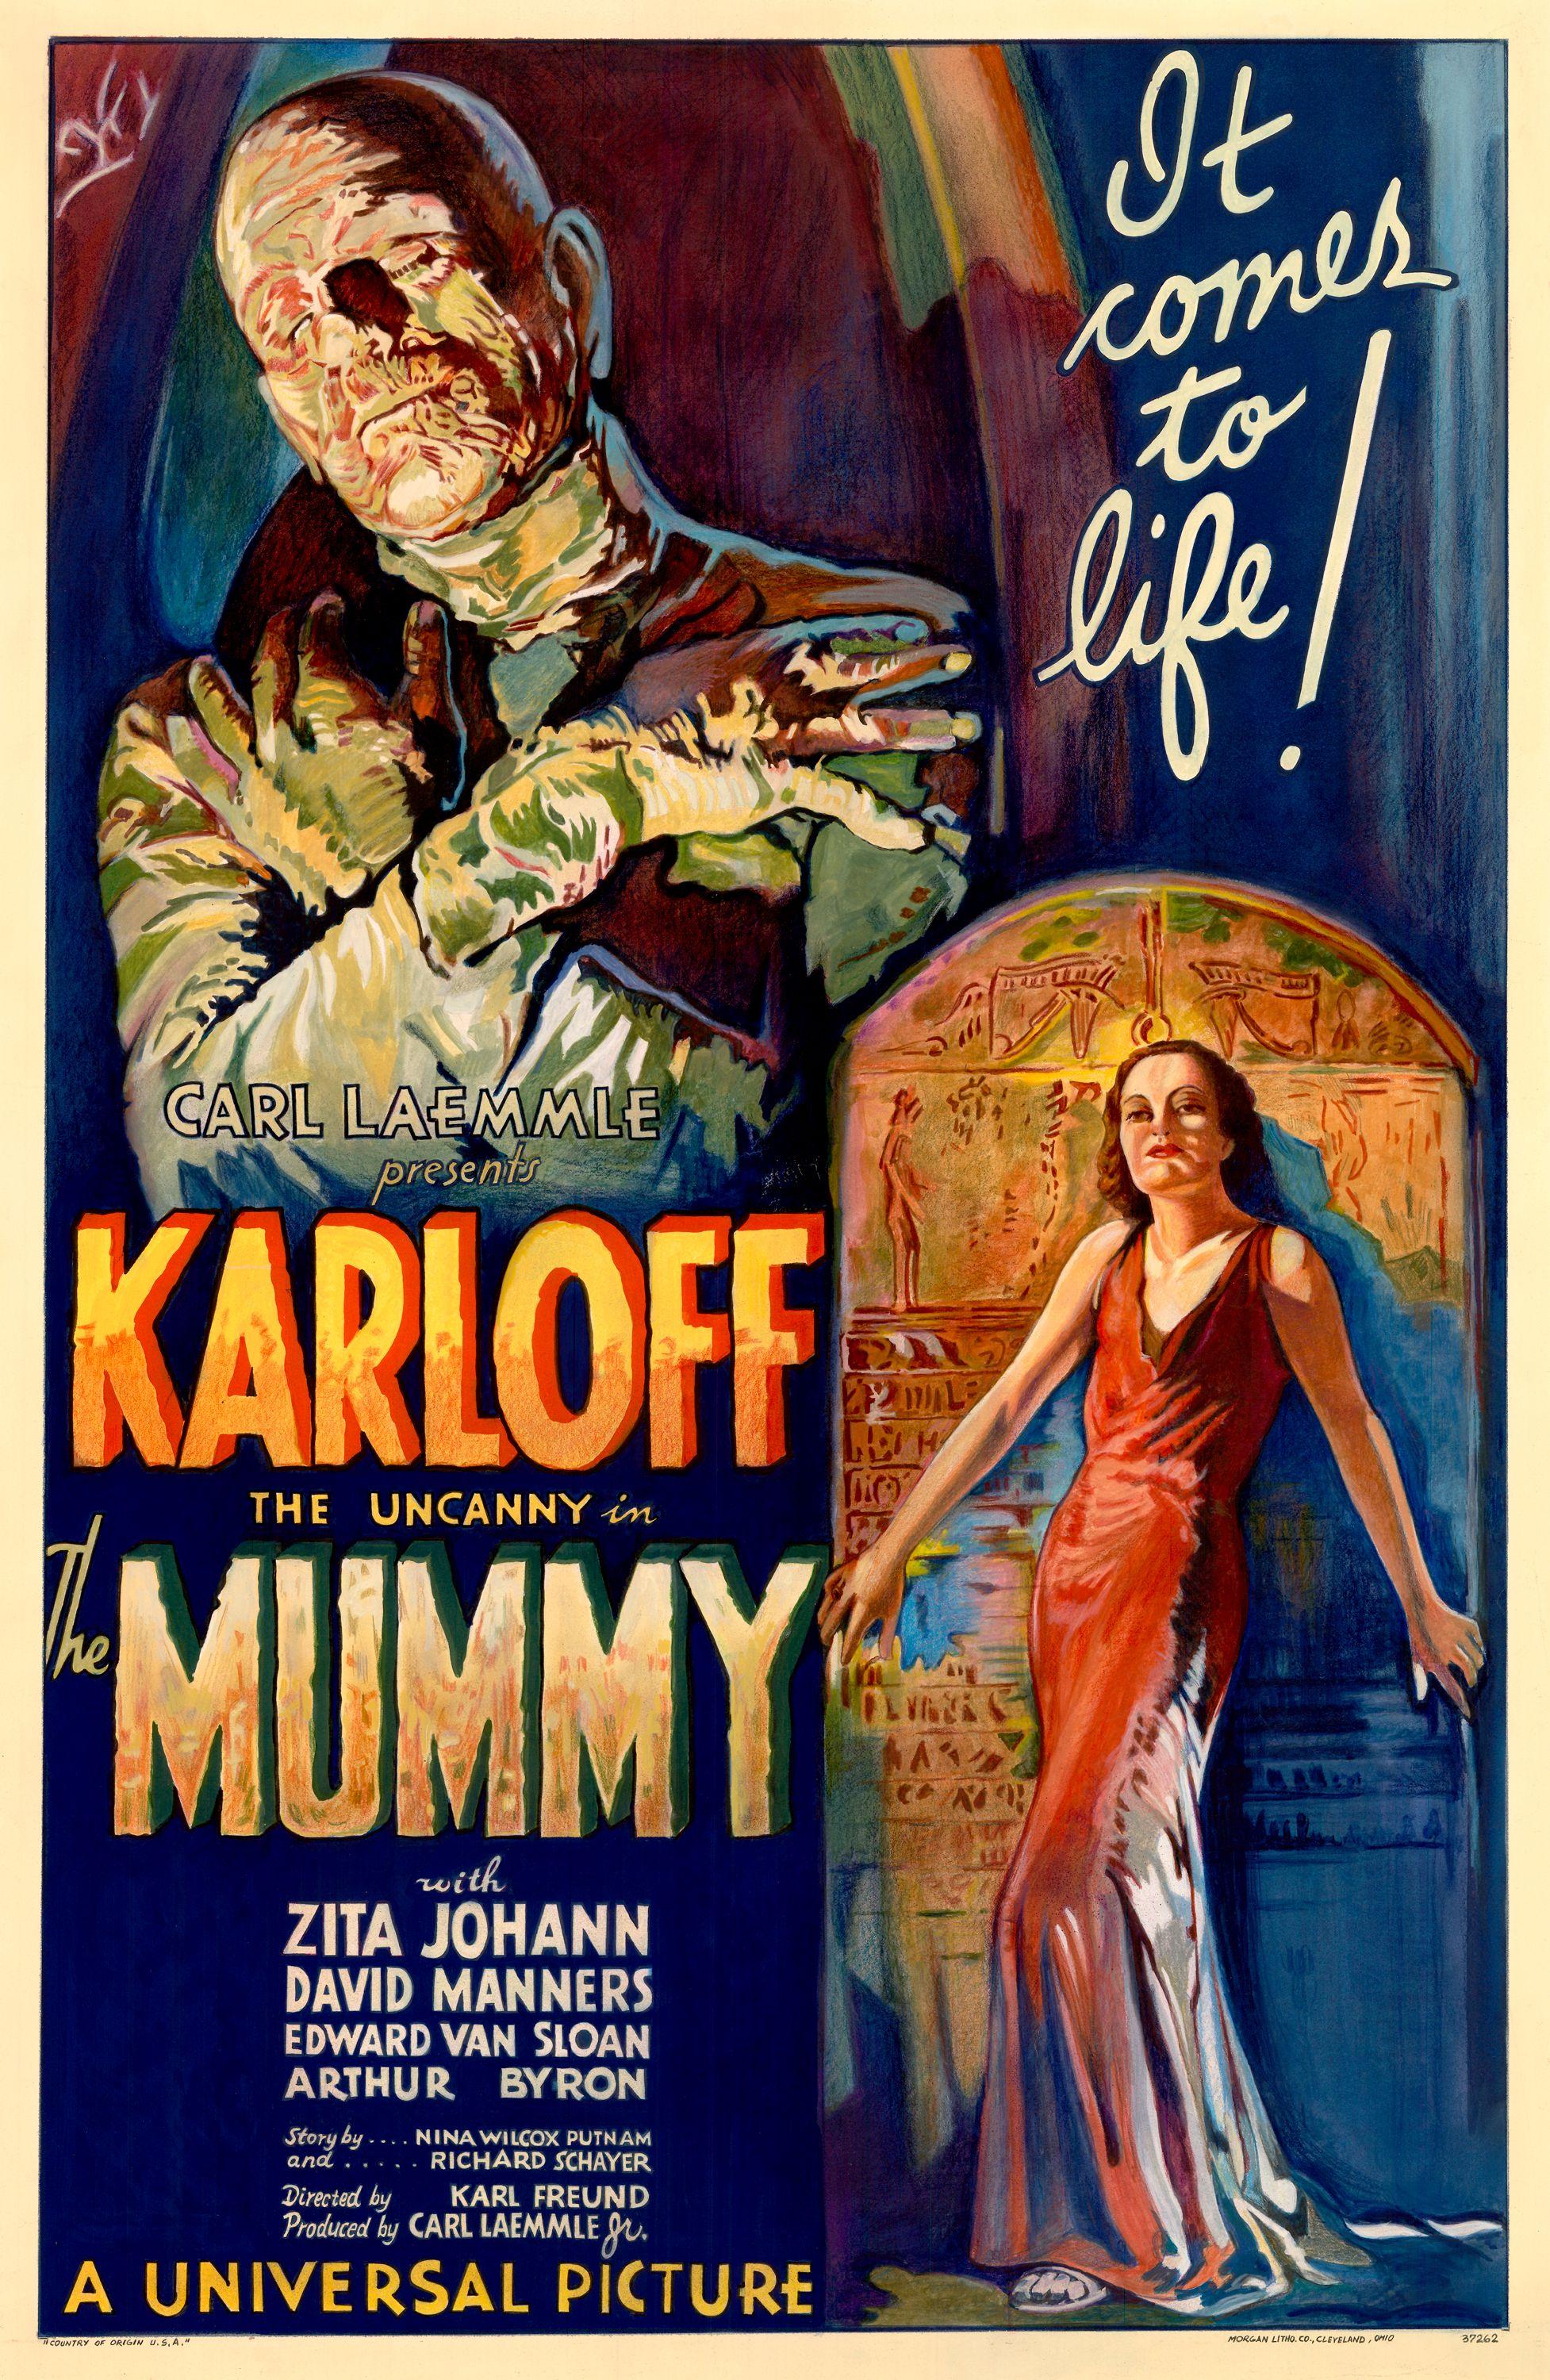 Mummy Movie Logo - The Mummy (1932 film)